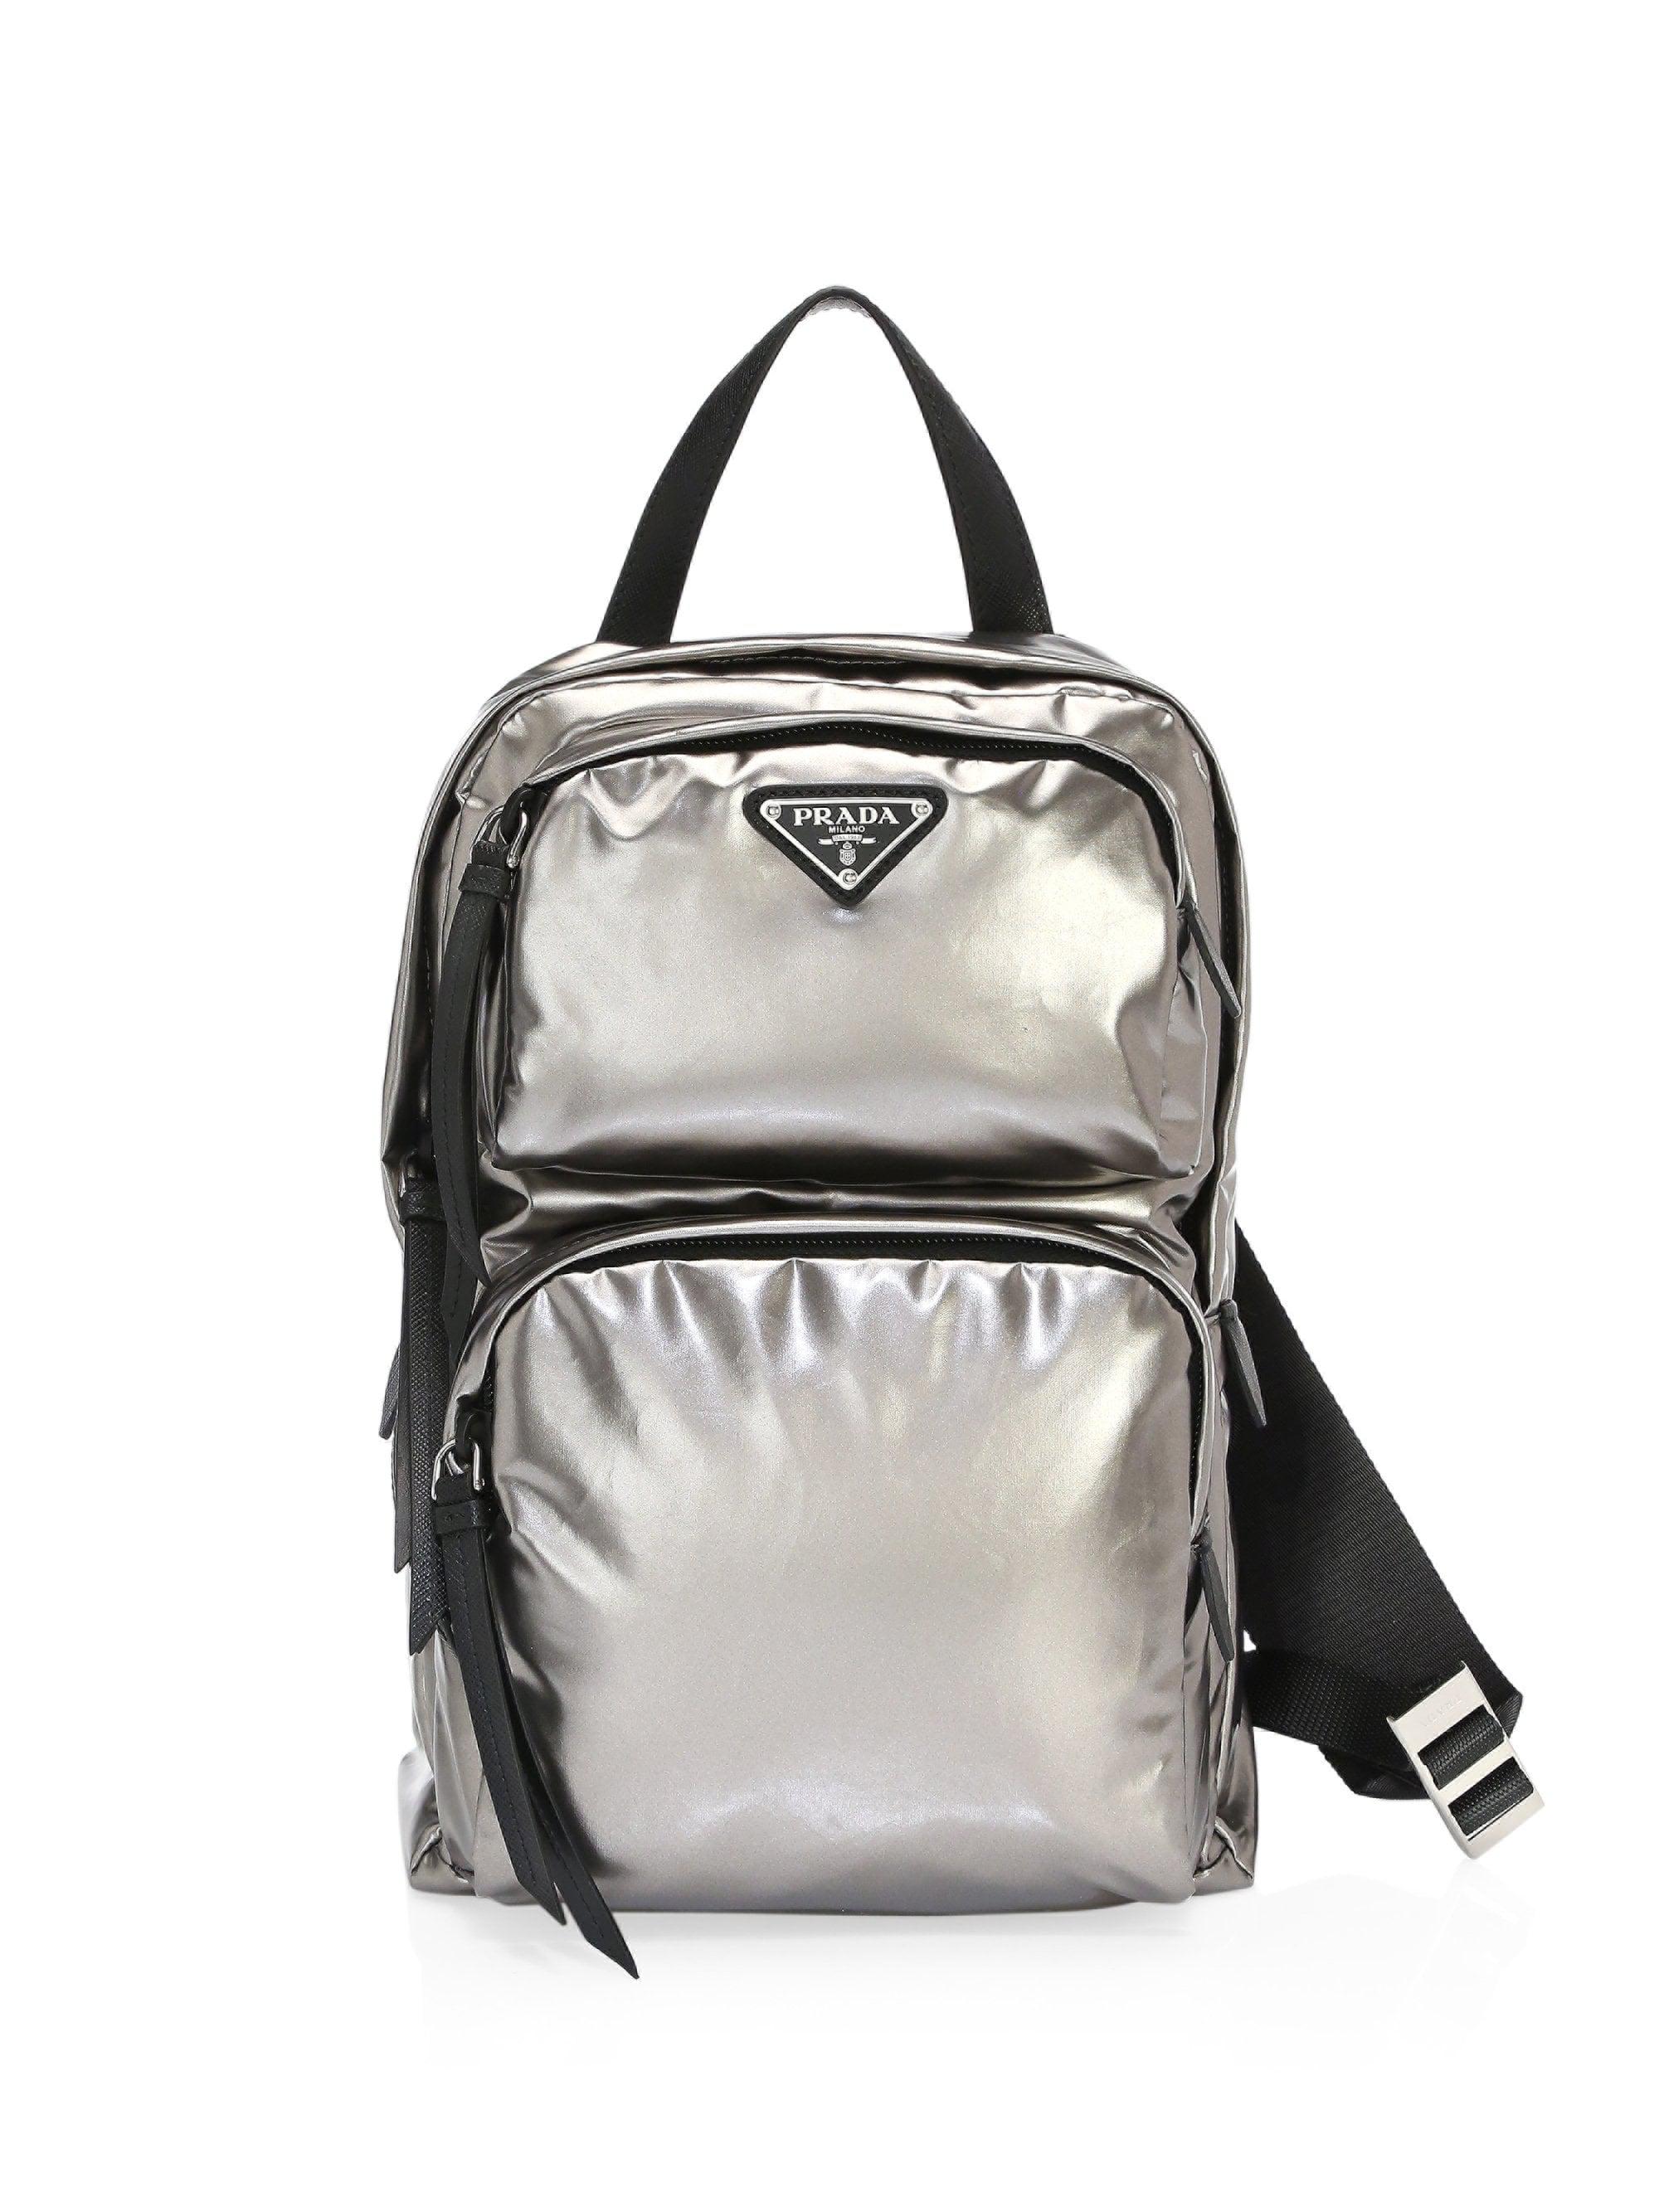 prada silver backpack